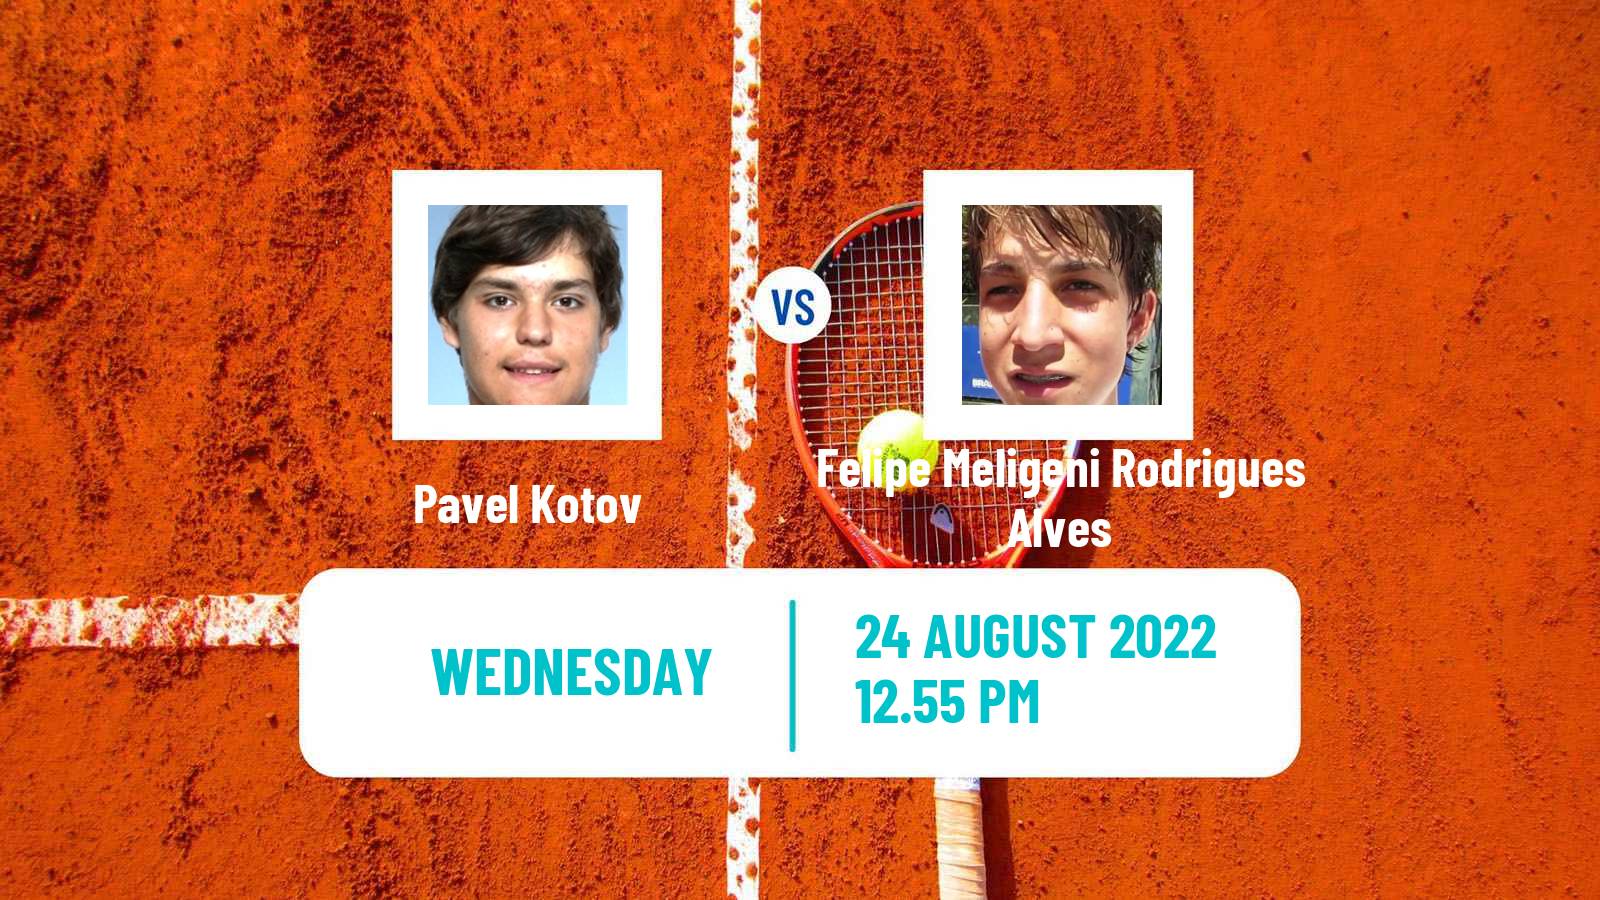 Tennis ATP US Open Pavel Kotov - Felipe Meligeni Rodrigues Alves